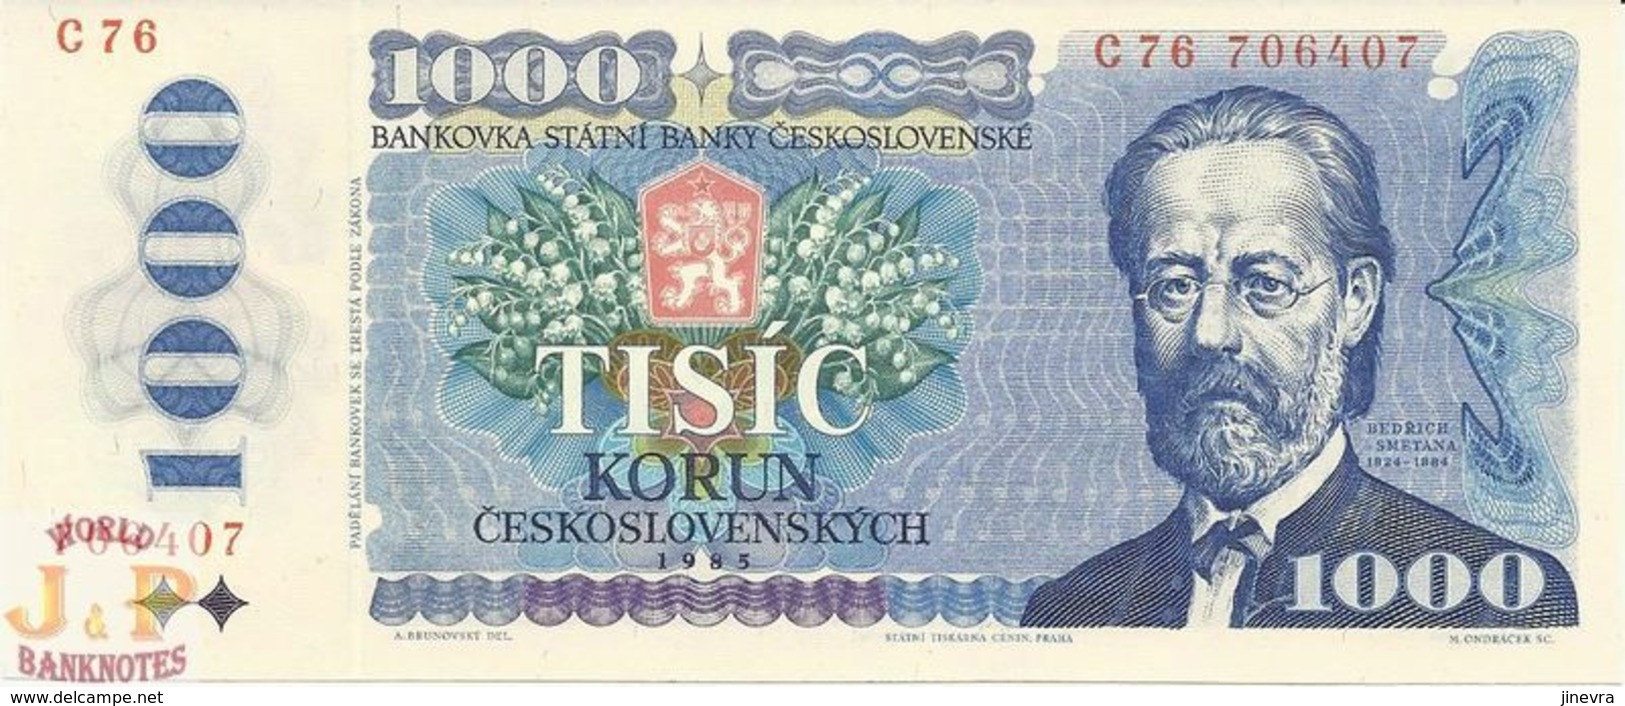 CZECHOSLOVAKIA 1000 KORUN 1985 PICK 98a UNC - Tsjechoslowakije